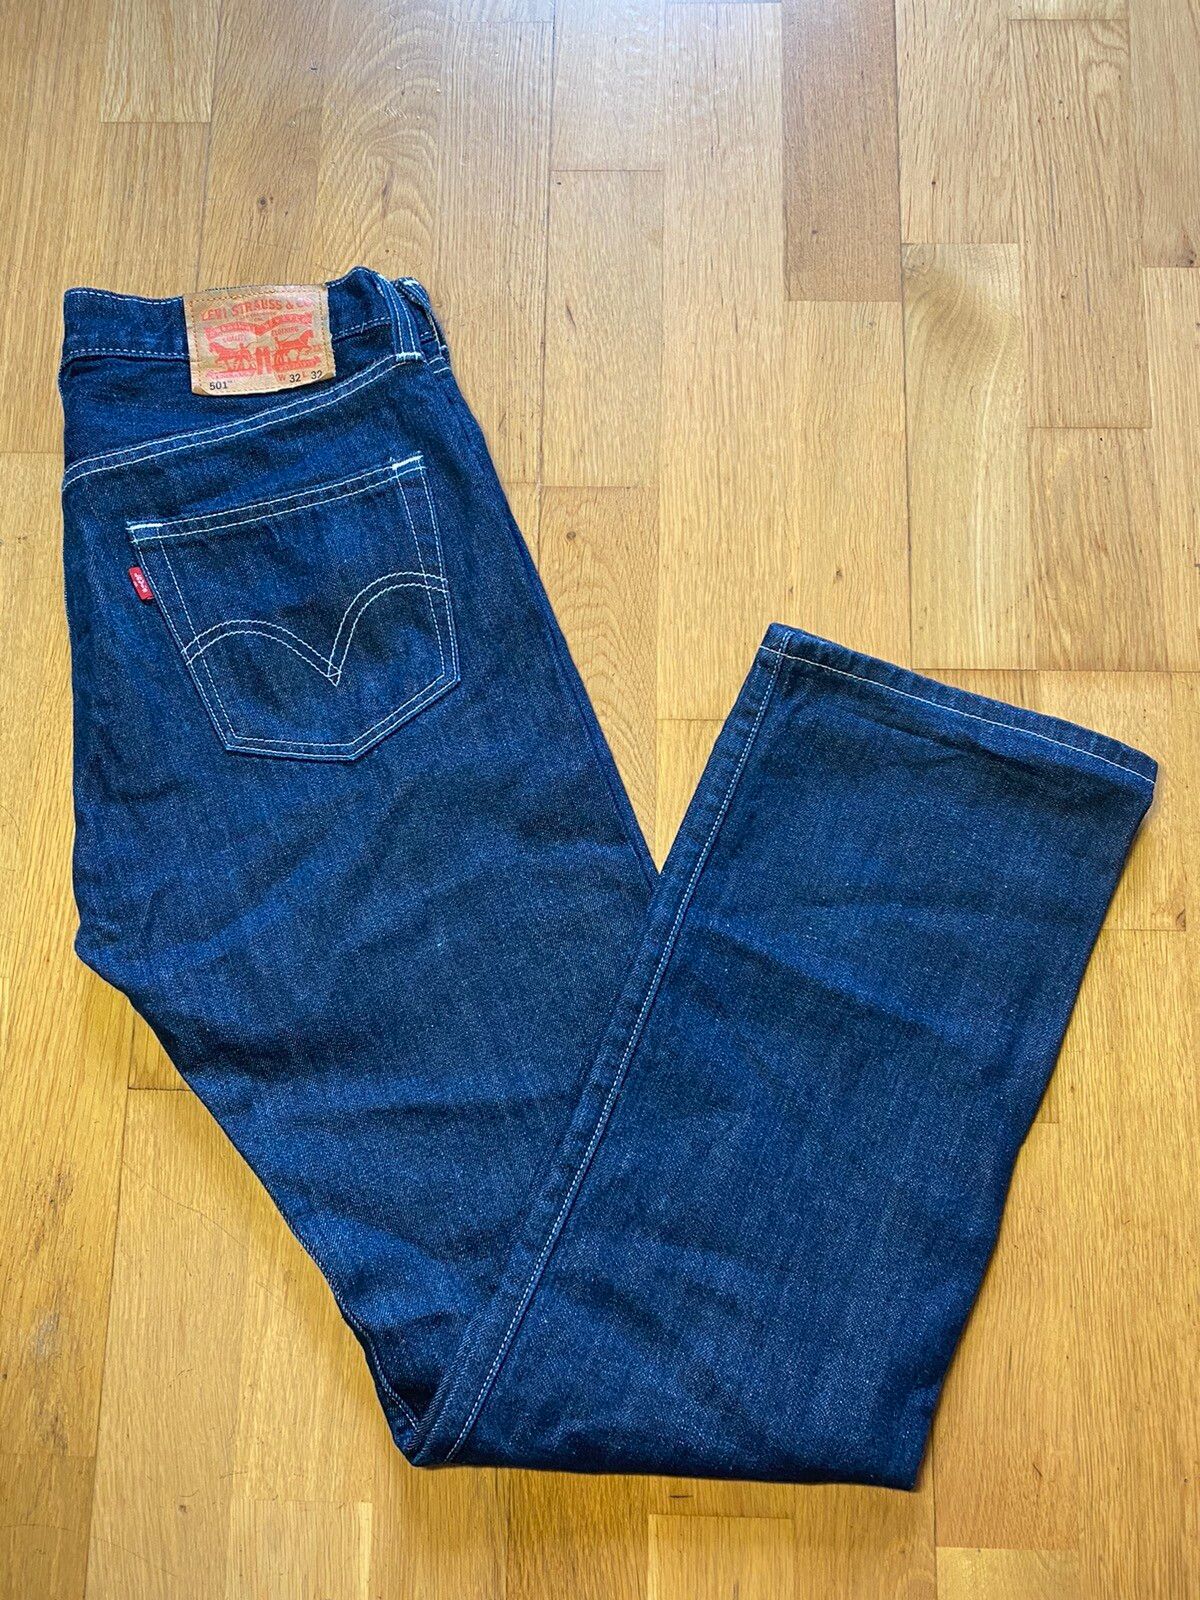 Levi's Levi’s strauss jeans 501 size 32 x 32 Size US 32 / EU 48 - 1 Preview